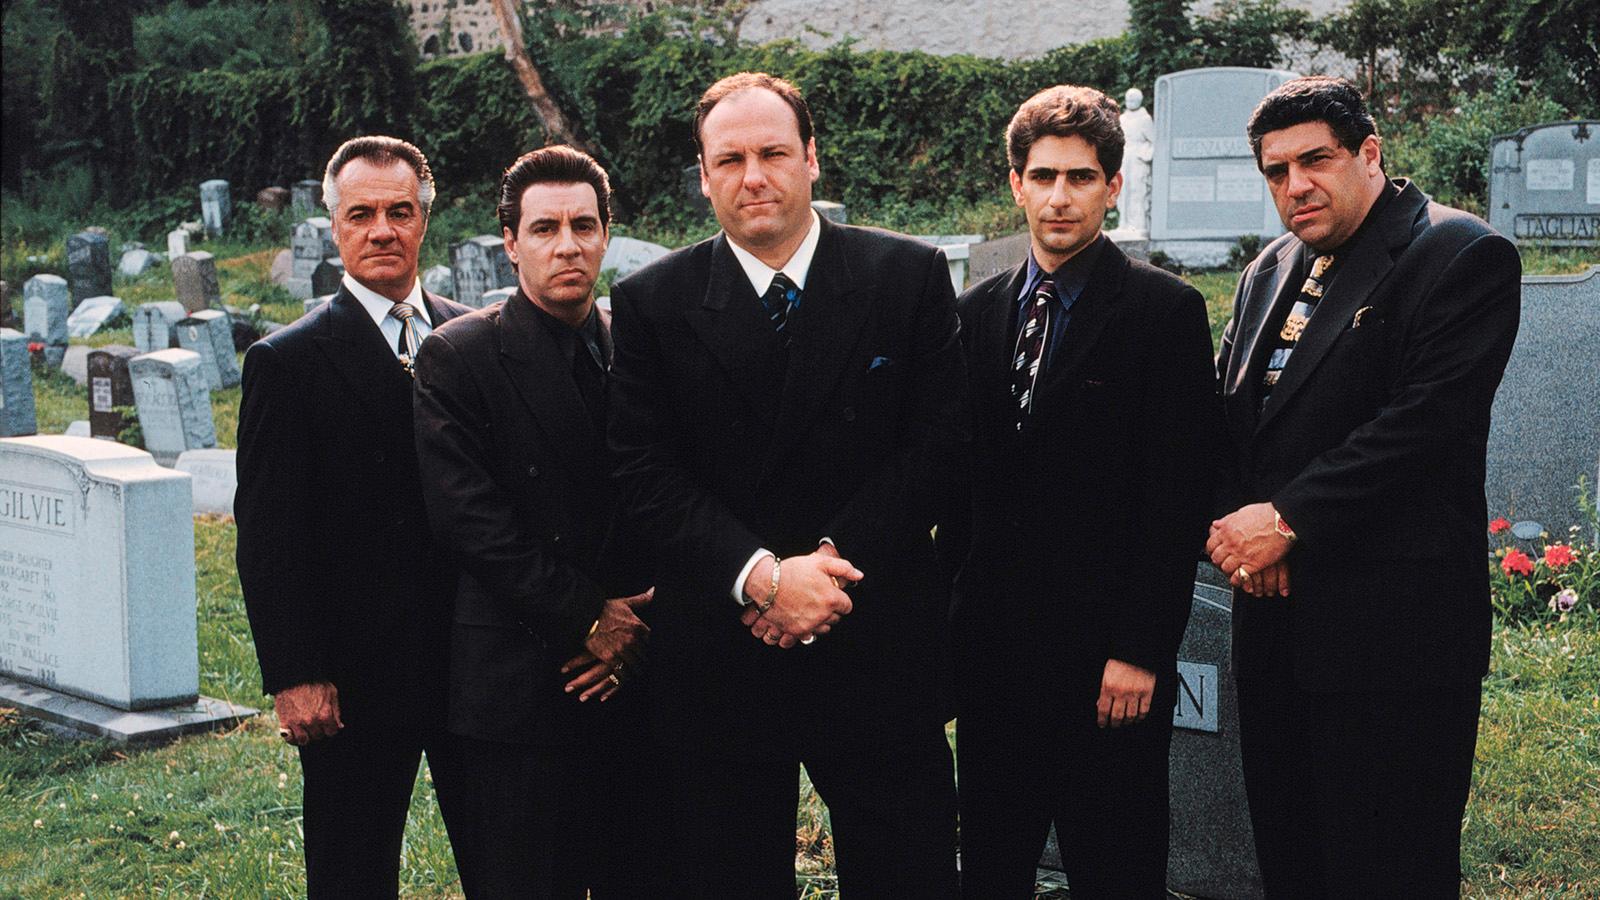 ”The Sopranos”.